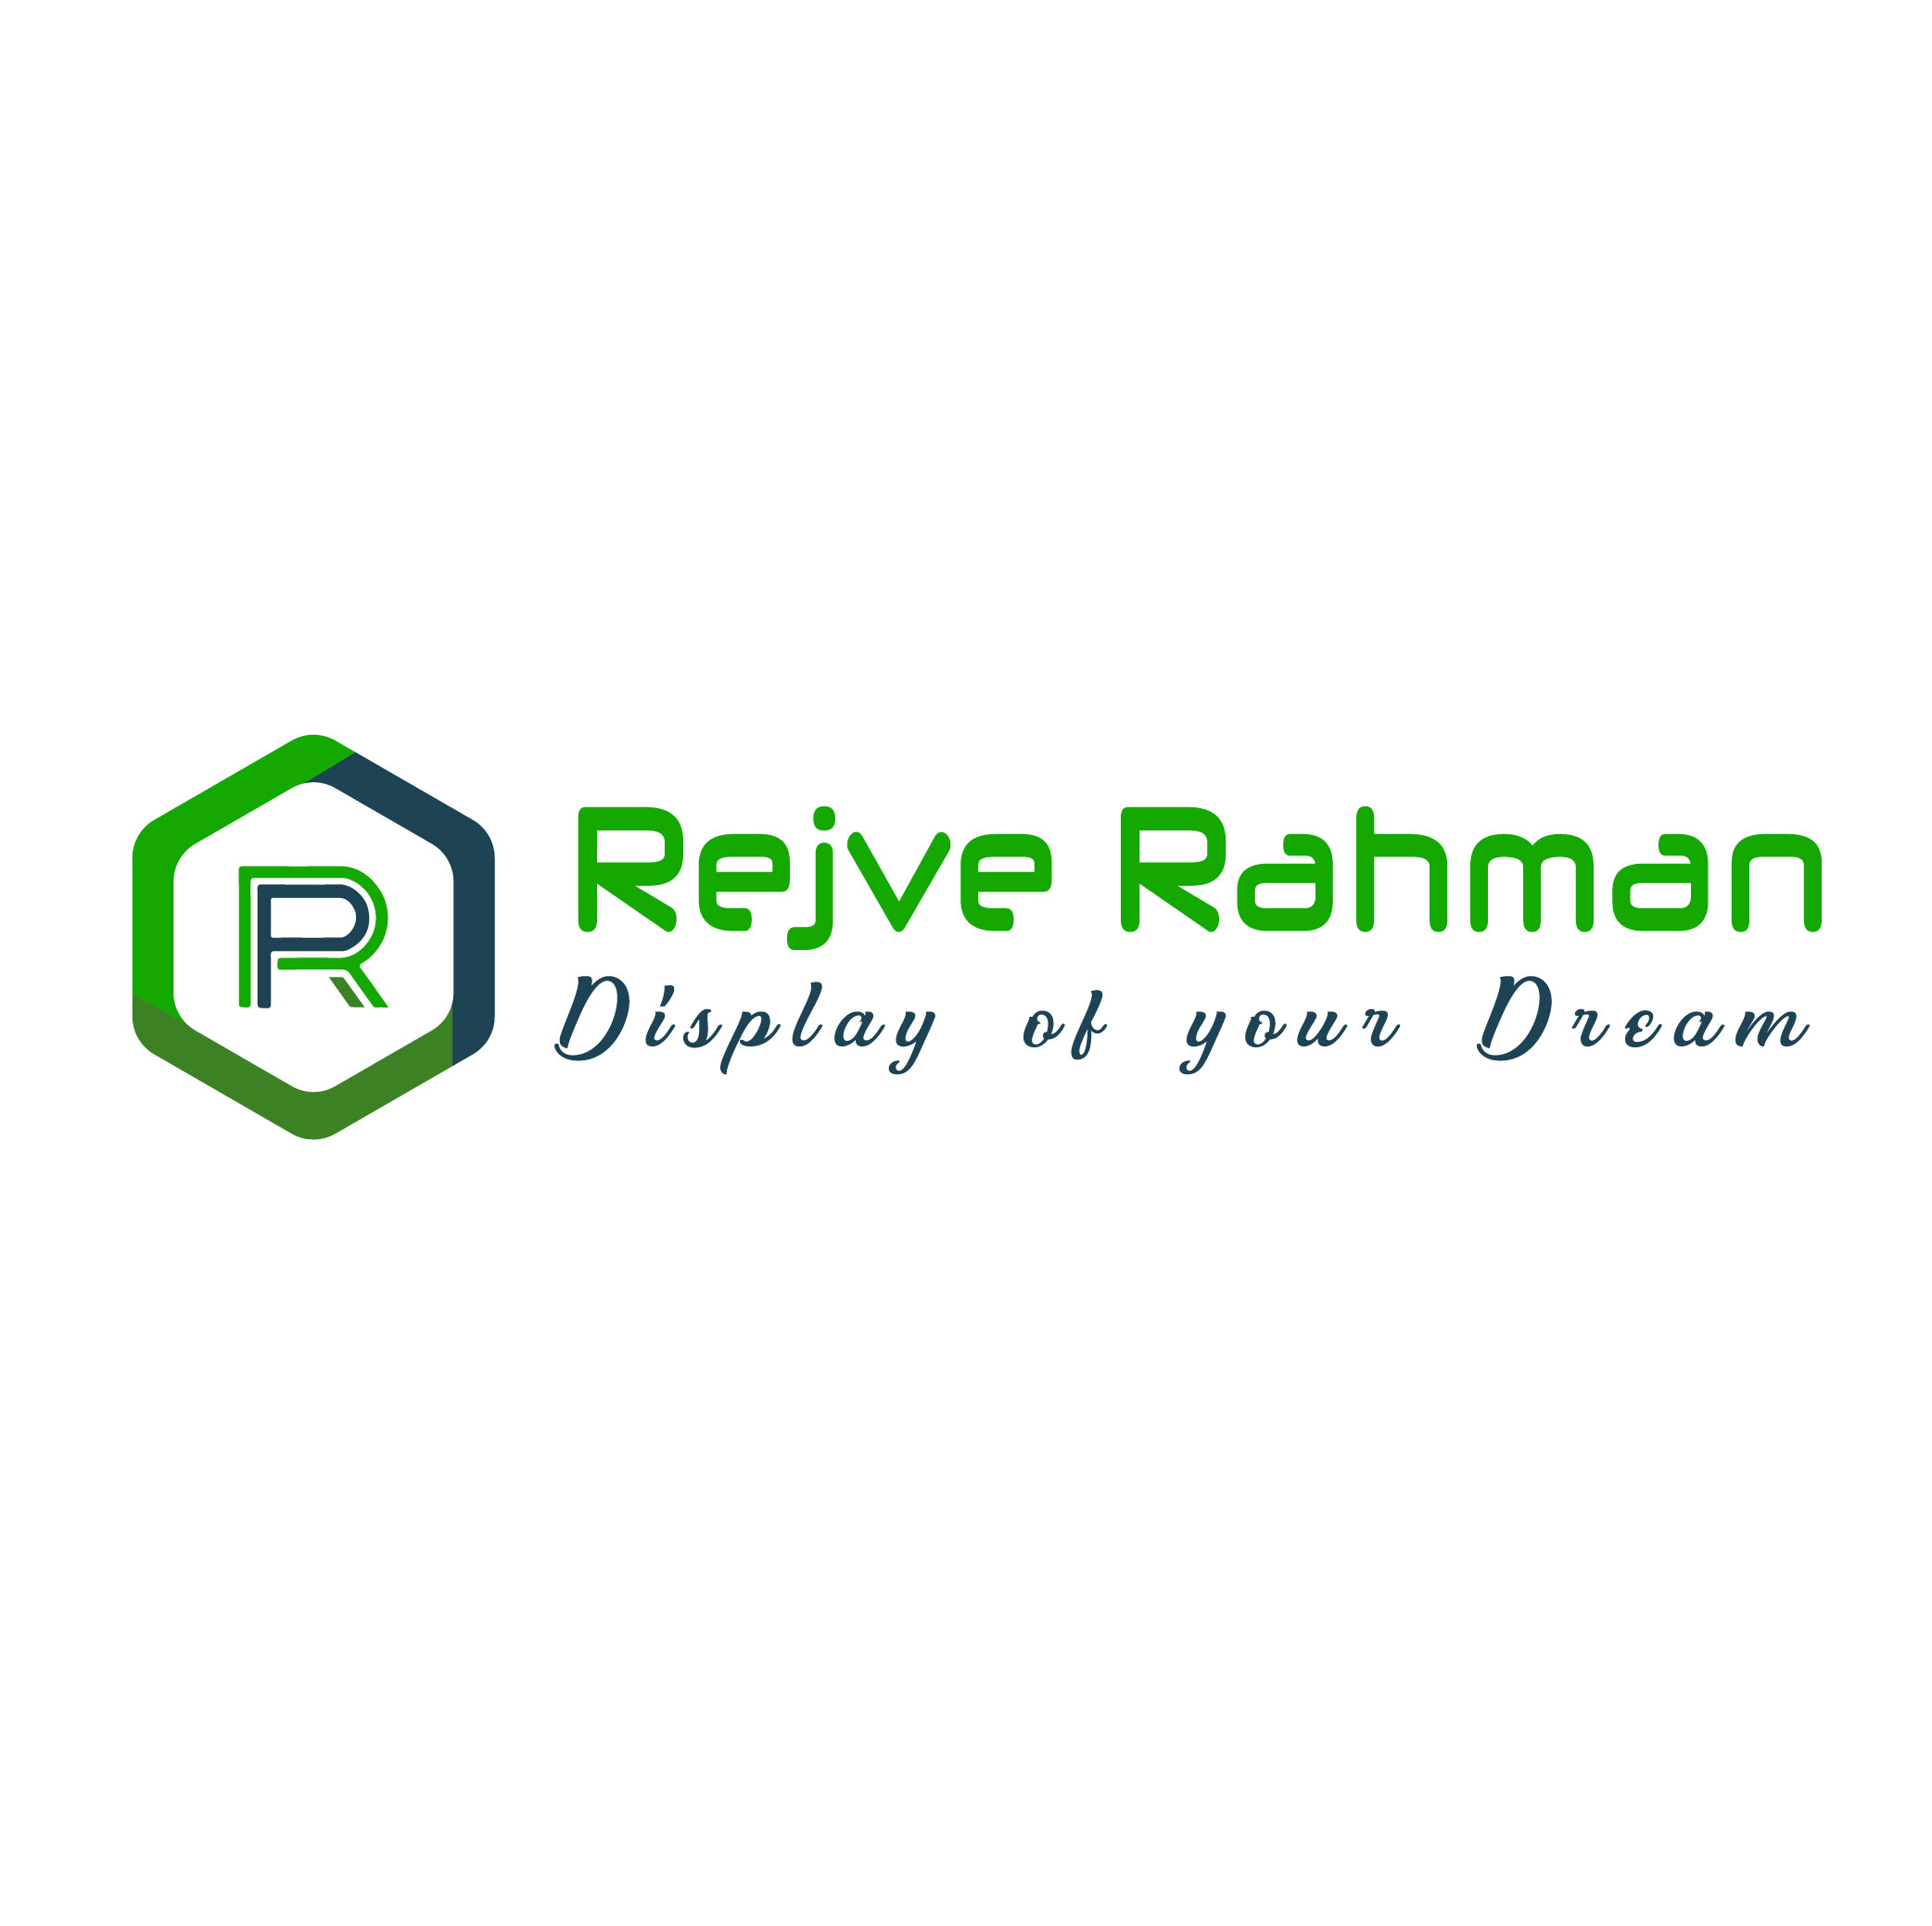 Rejve Rahman